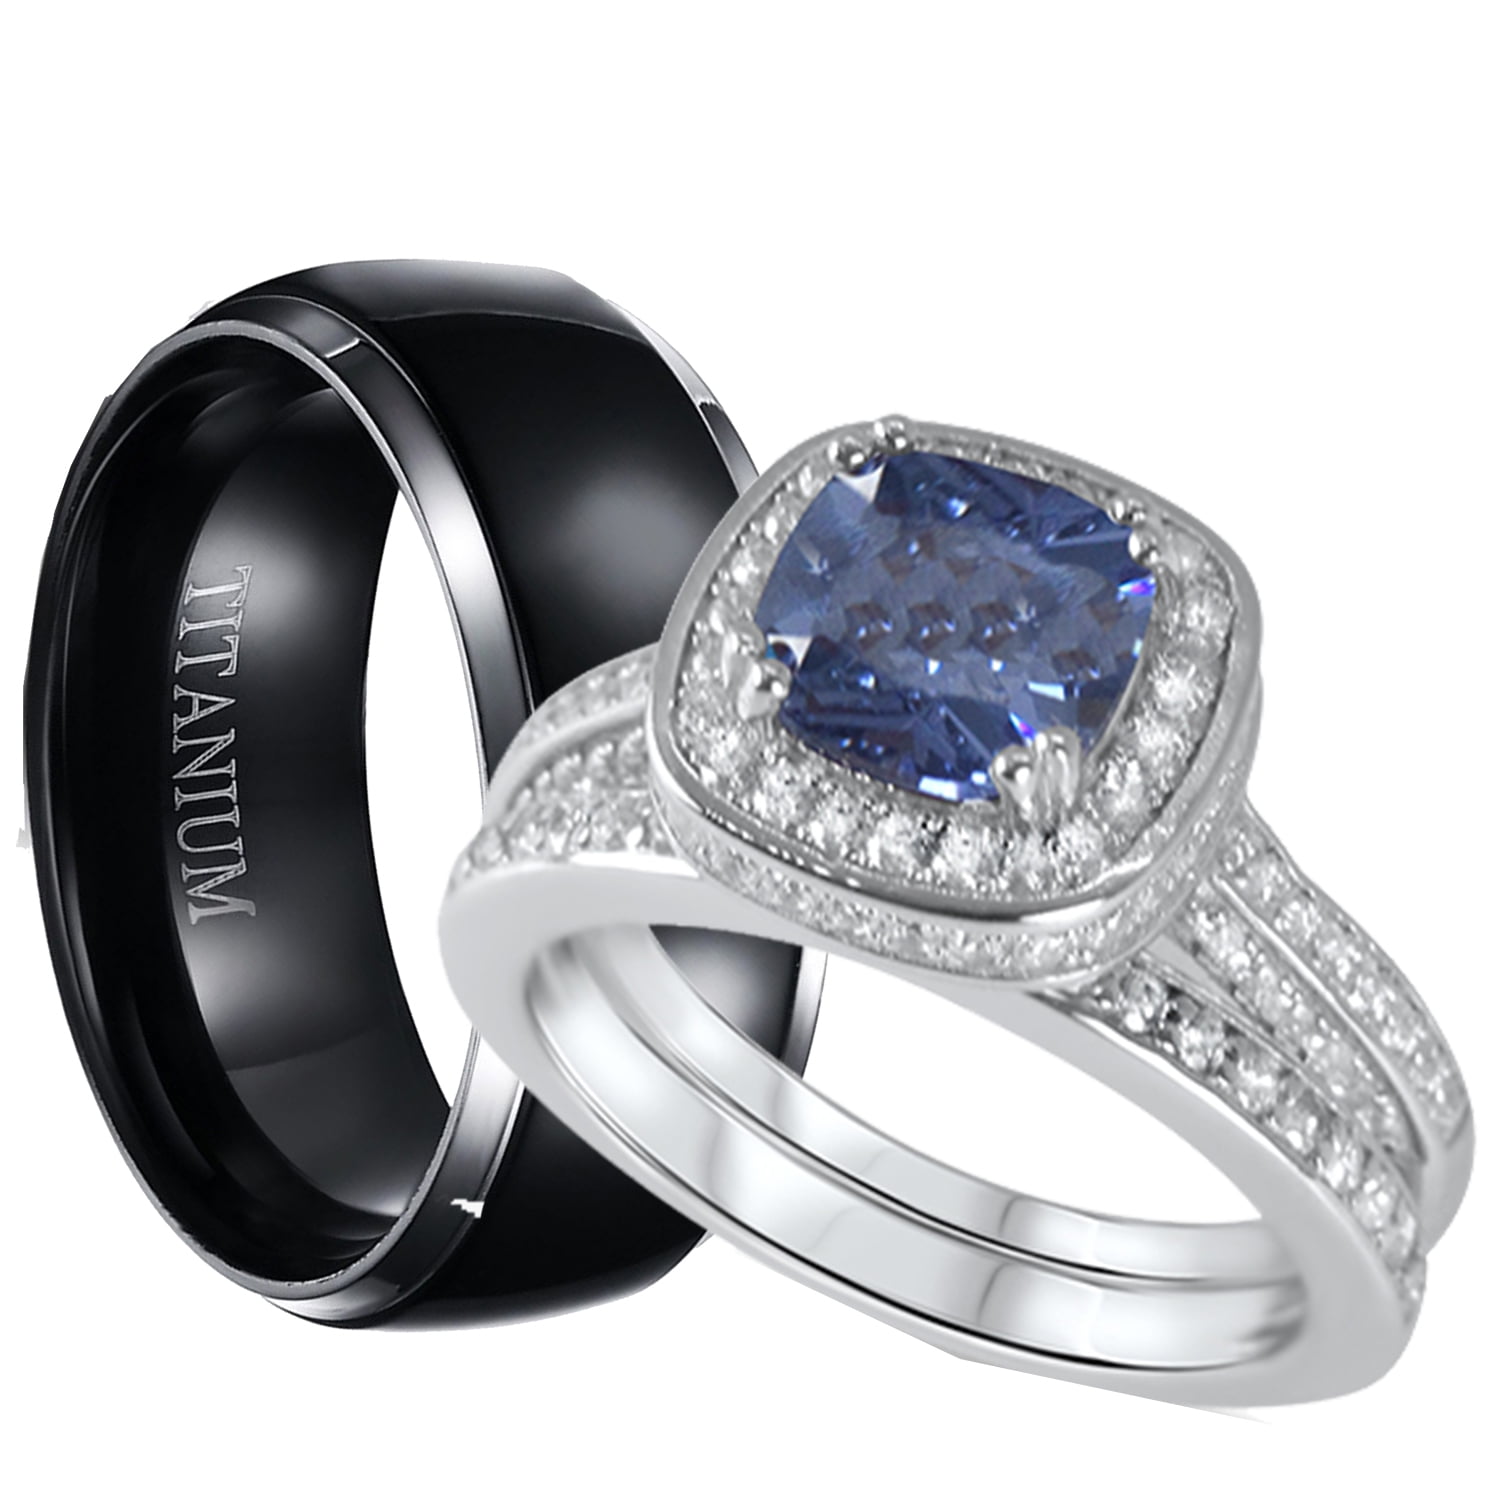 Titanium Wedding Band Mens Ring Blue and White Diamonds Bridal Jewelry Size 6-13